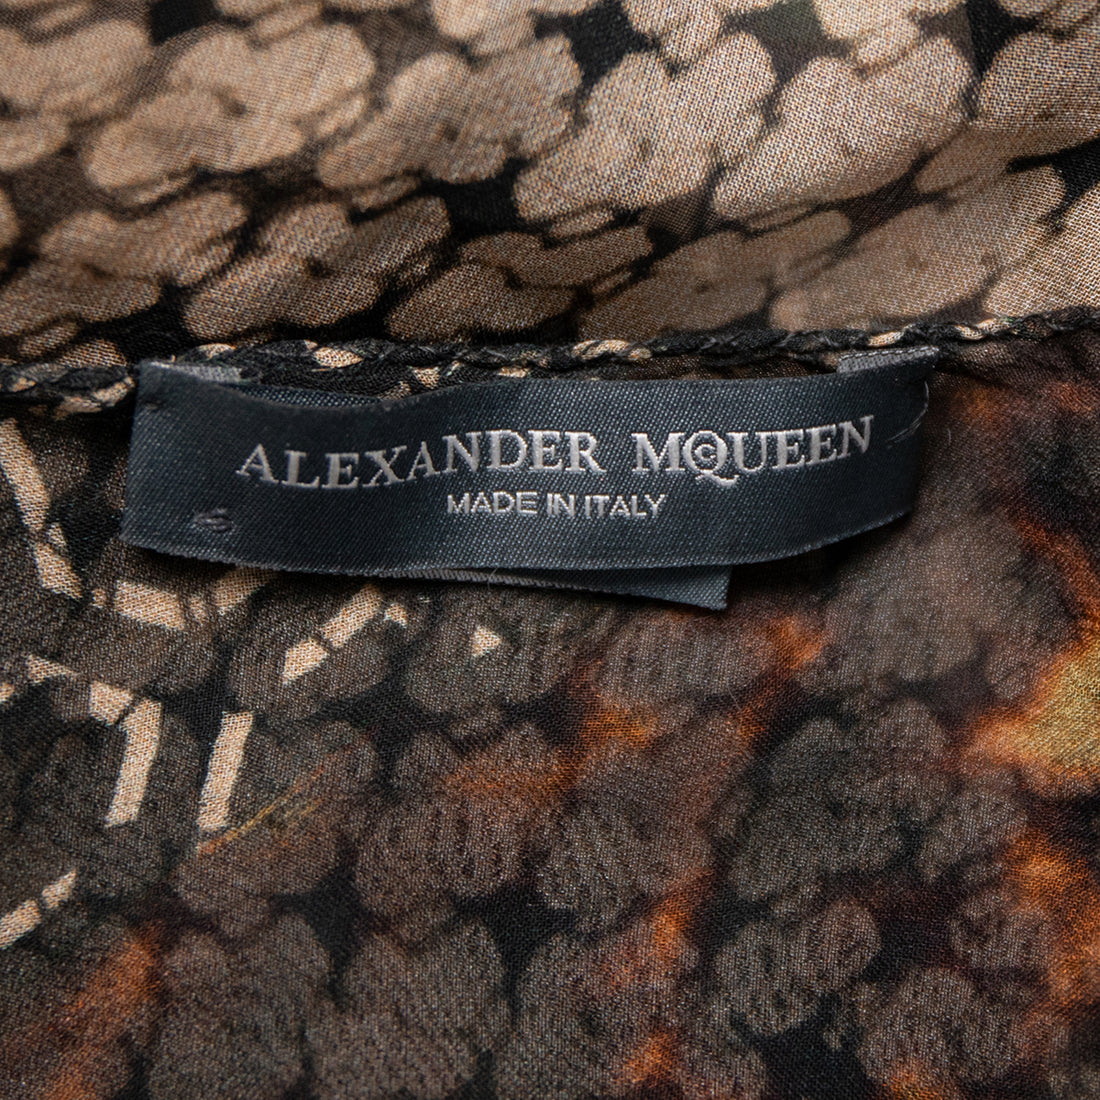 Alexander McQueen silk scarf with "God Save McQueen" print